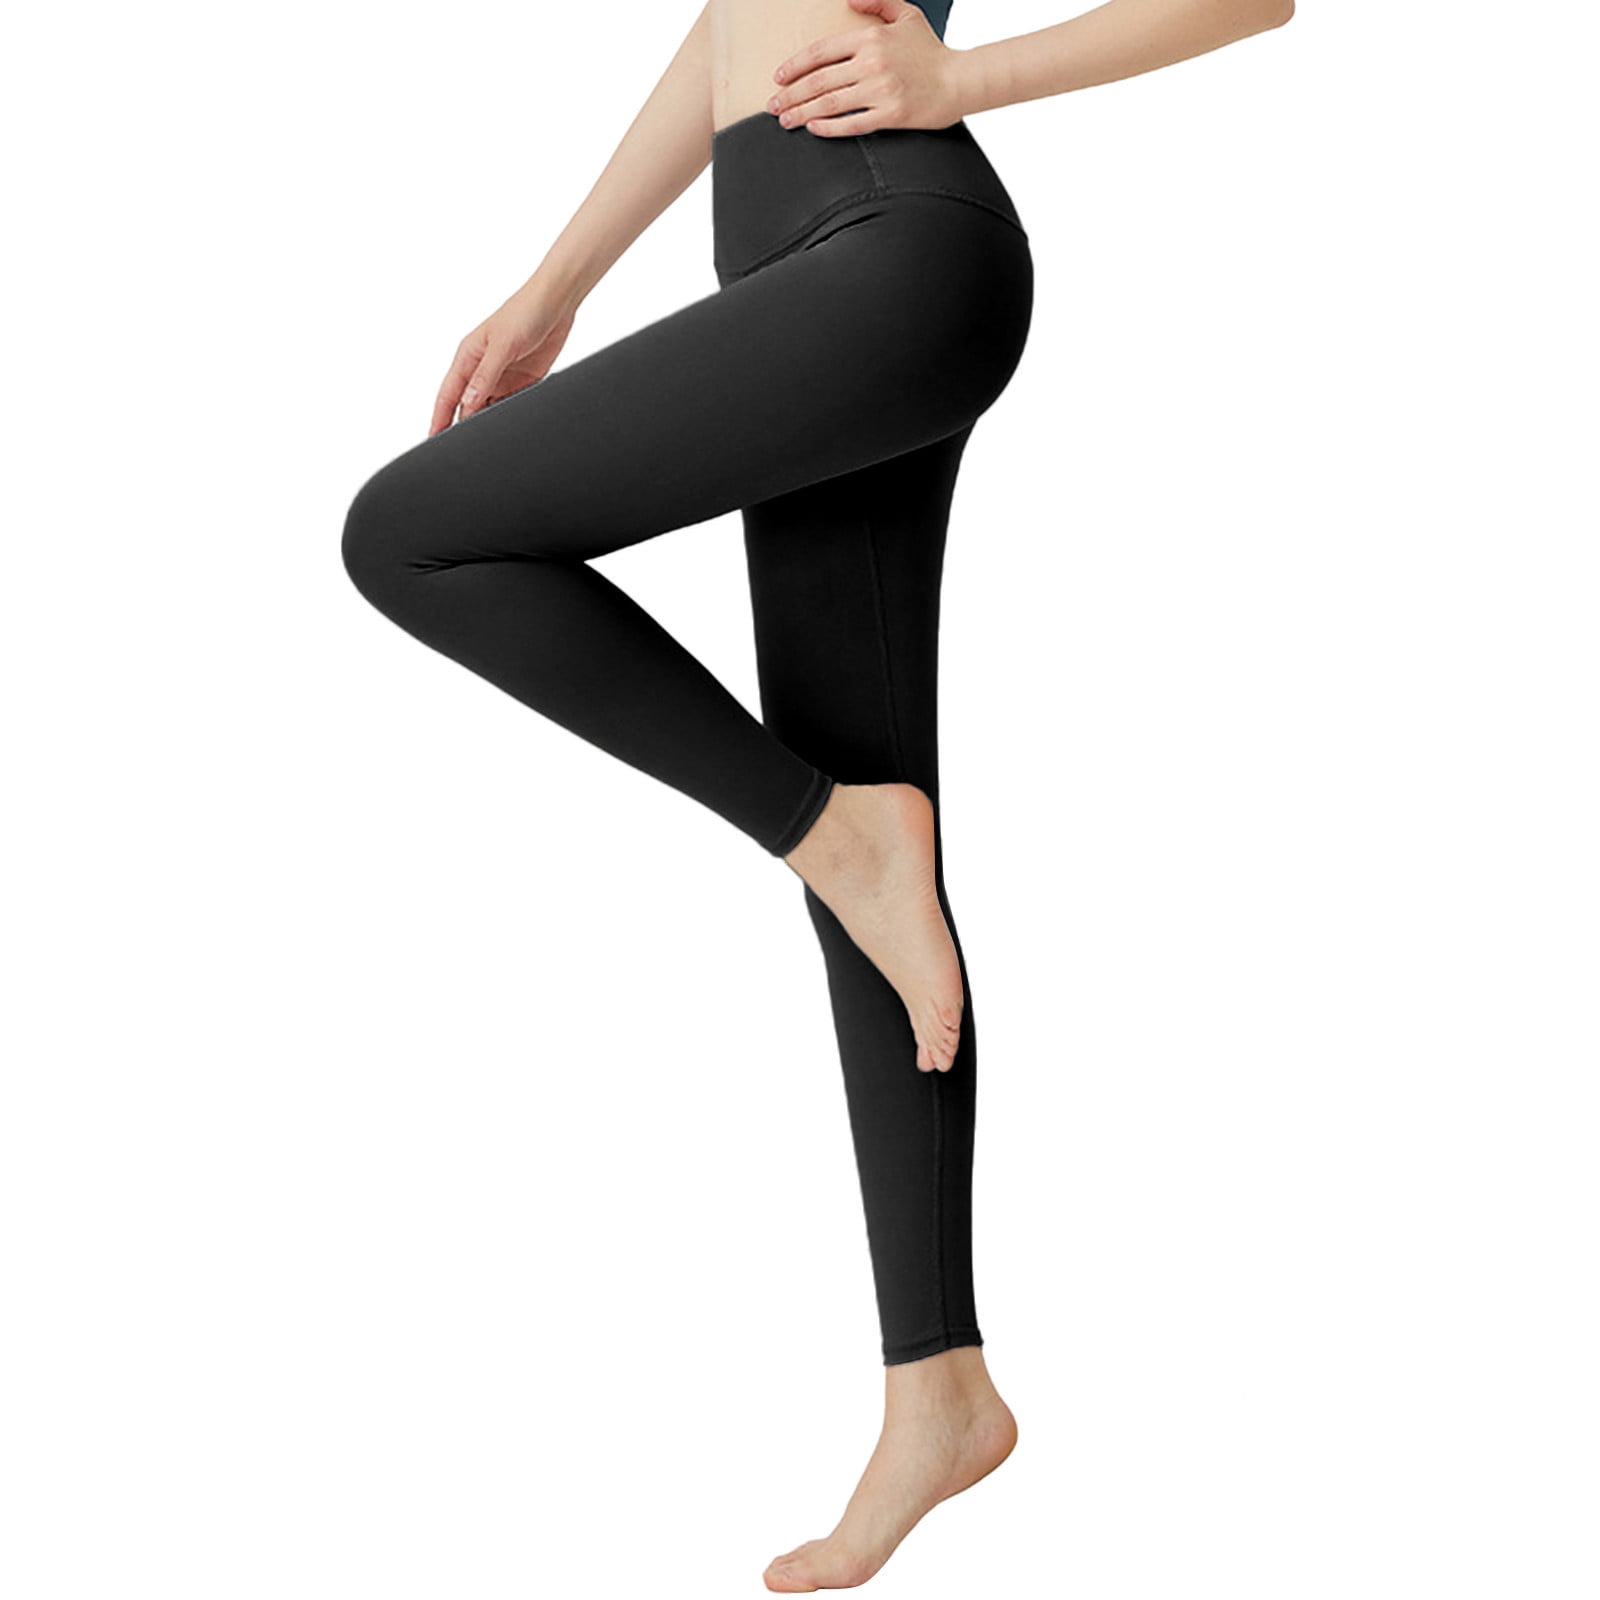 adviicd Yoga Pants For Women Dressy Yoga Women's Yoga Pants with Pockets -  Leggings with Pockets, High Waist Tummy Control Non See-Through Workout Pants  Black L 